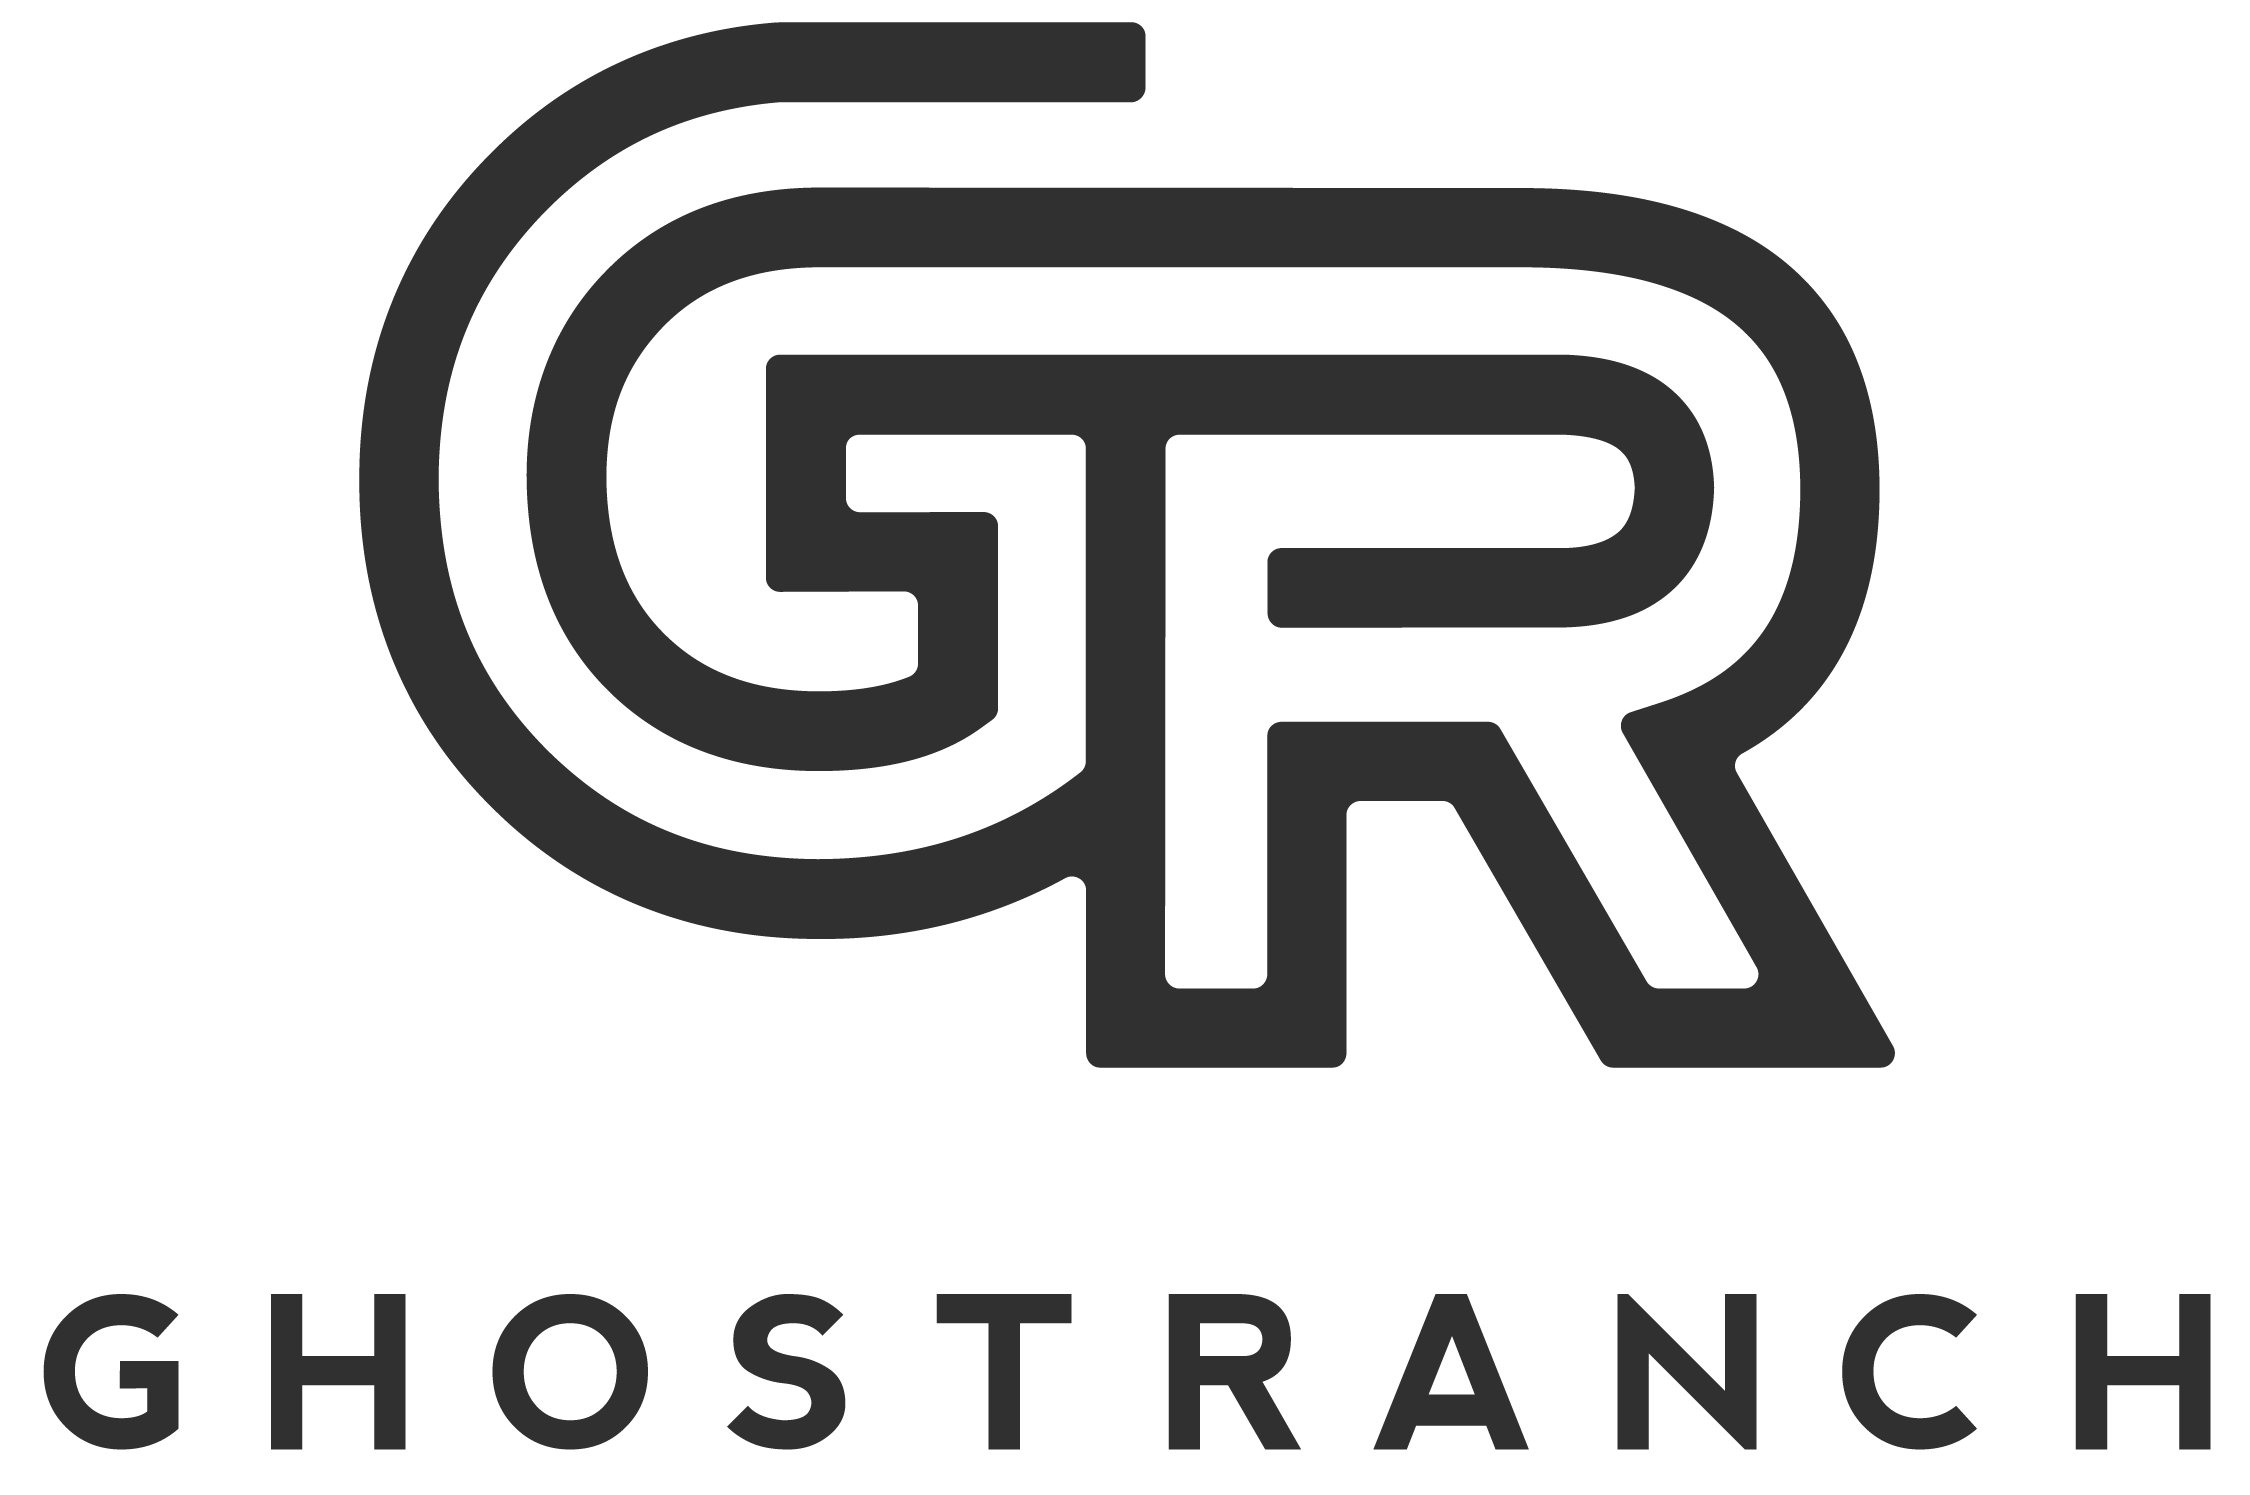 ghostranch logo.png